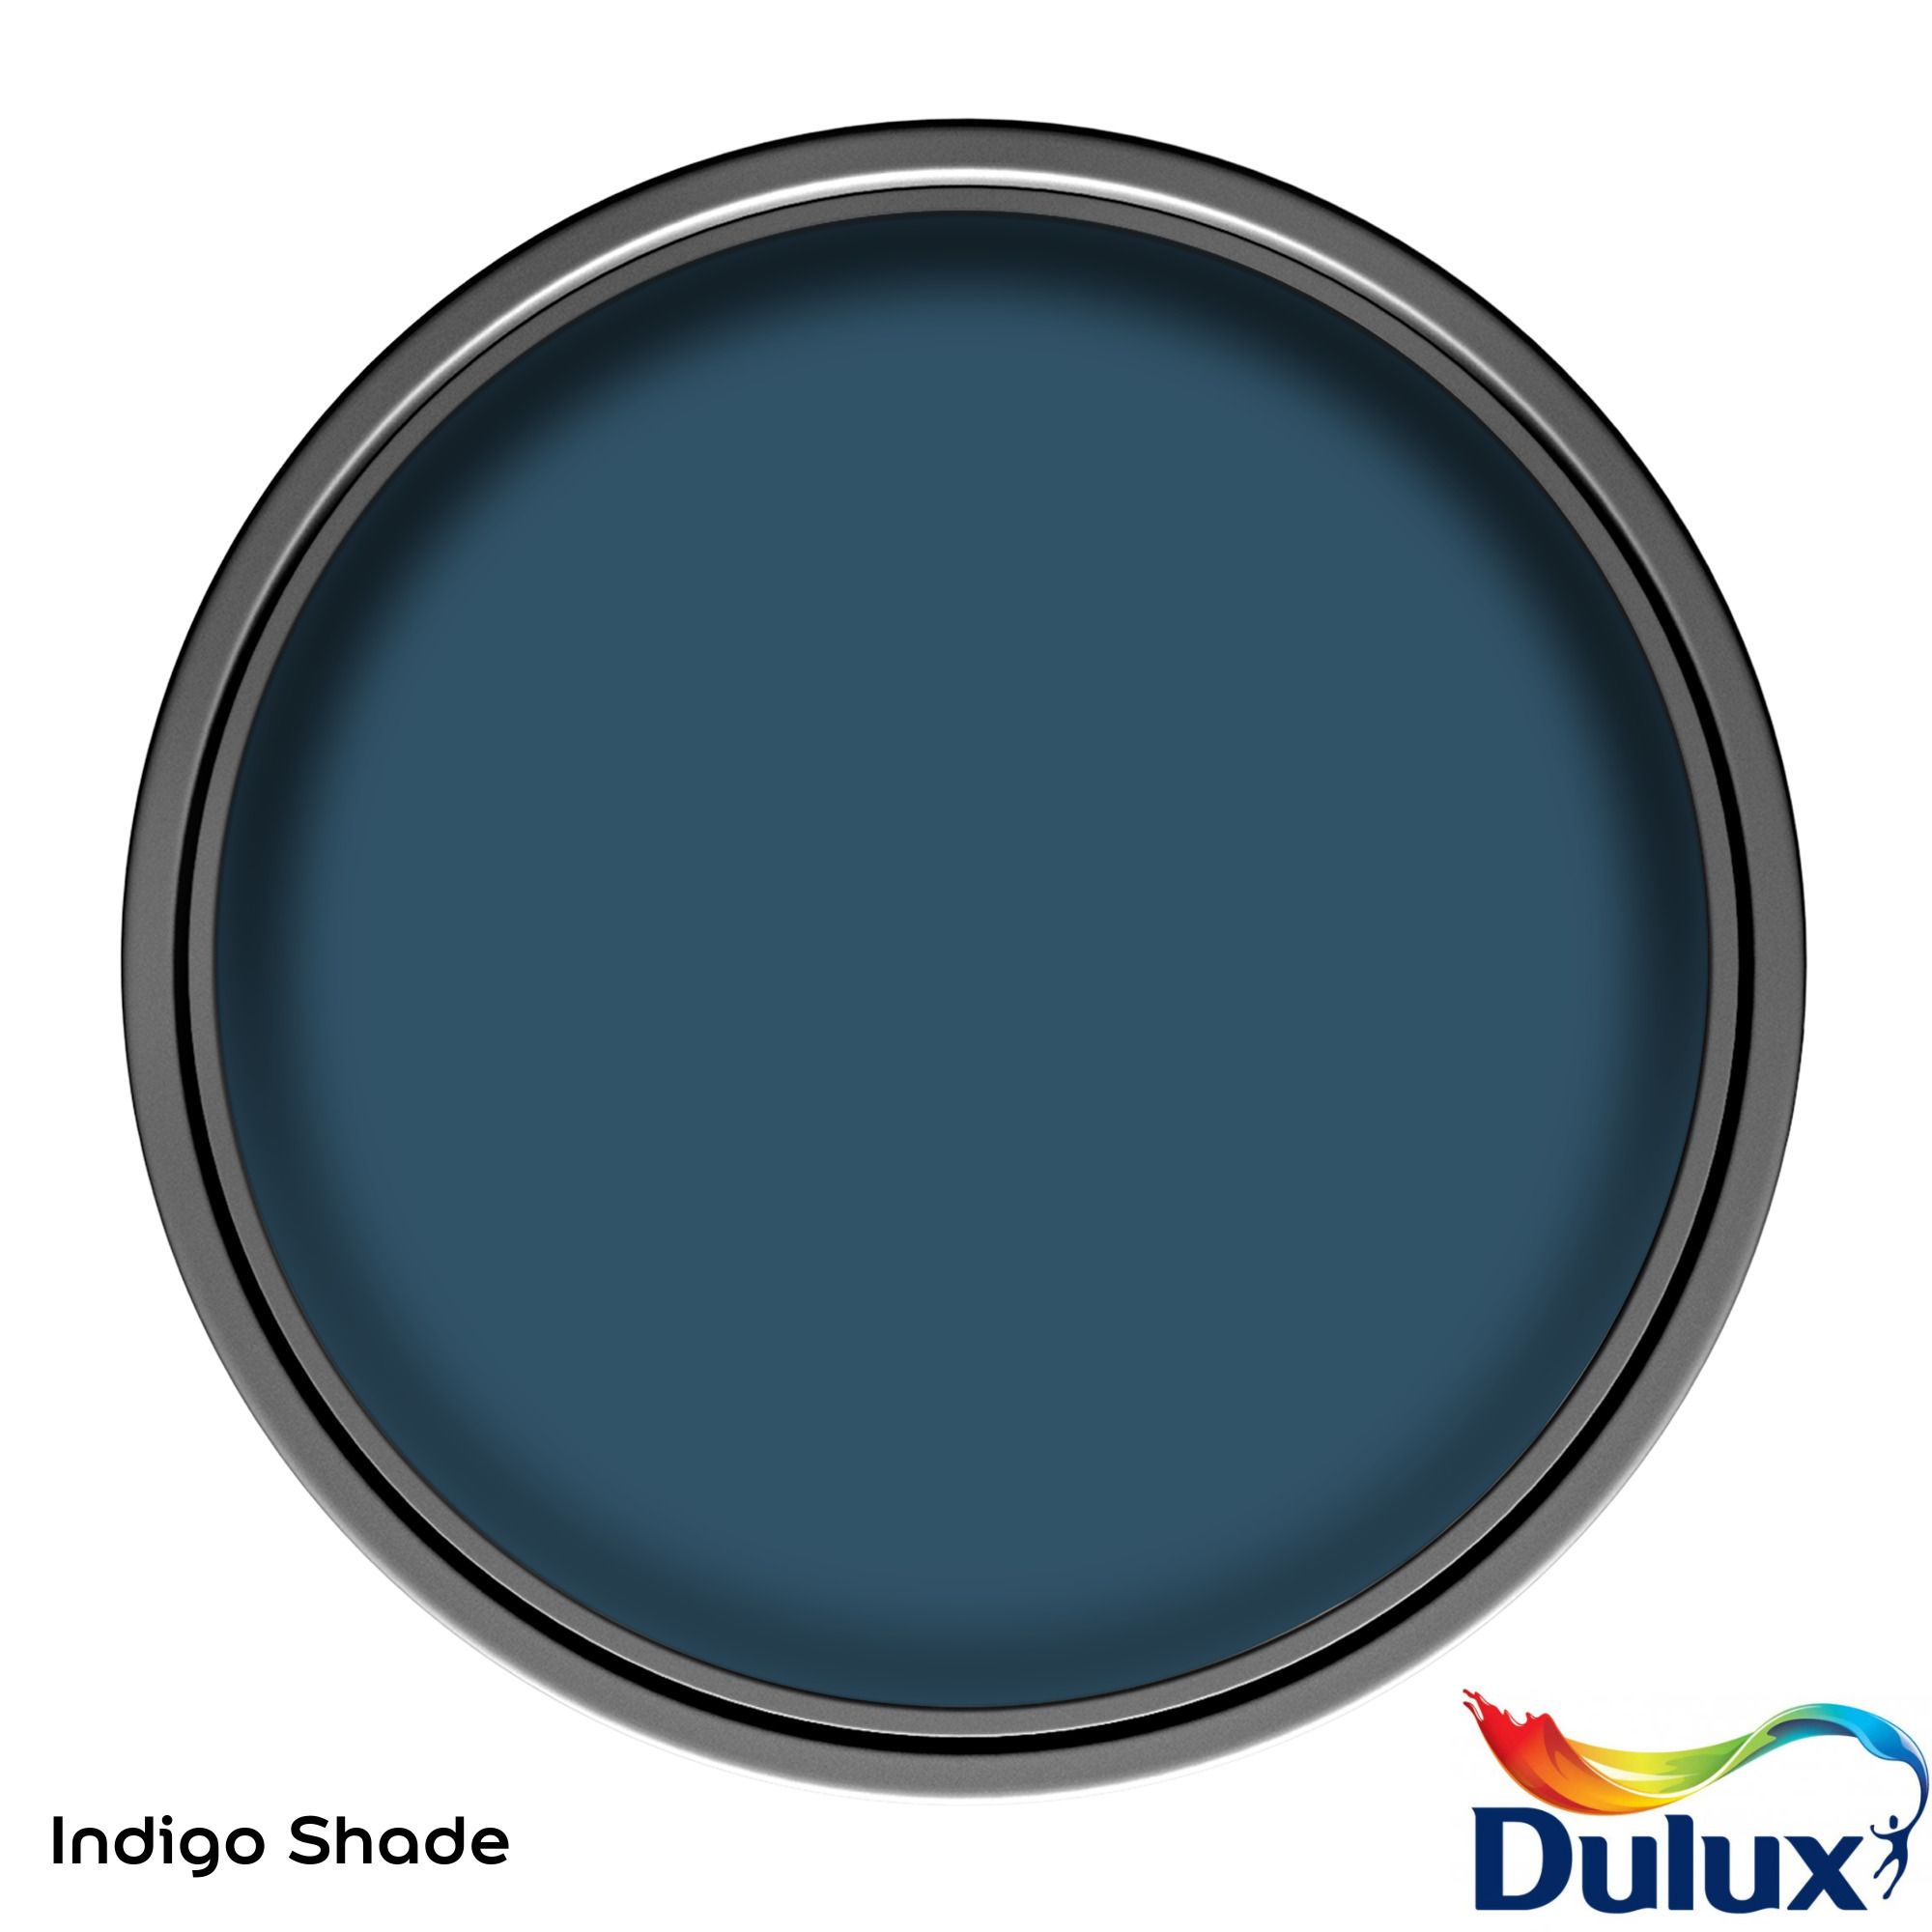 Dulux Easycare Indigo Shade Matt Wall paint, 2.5L